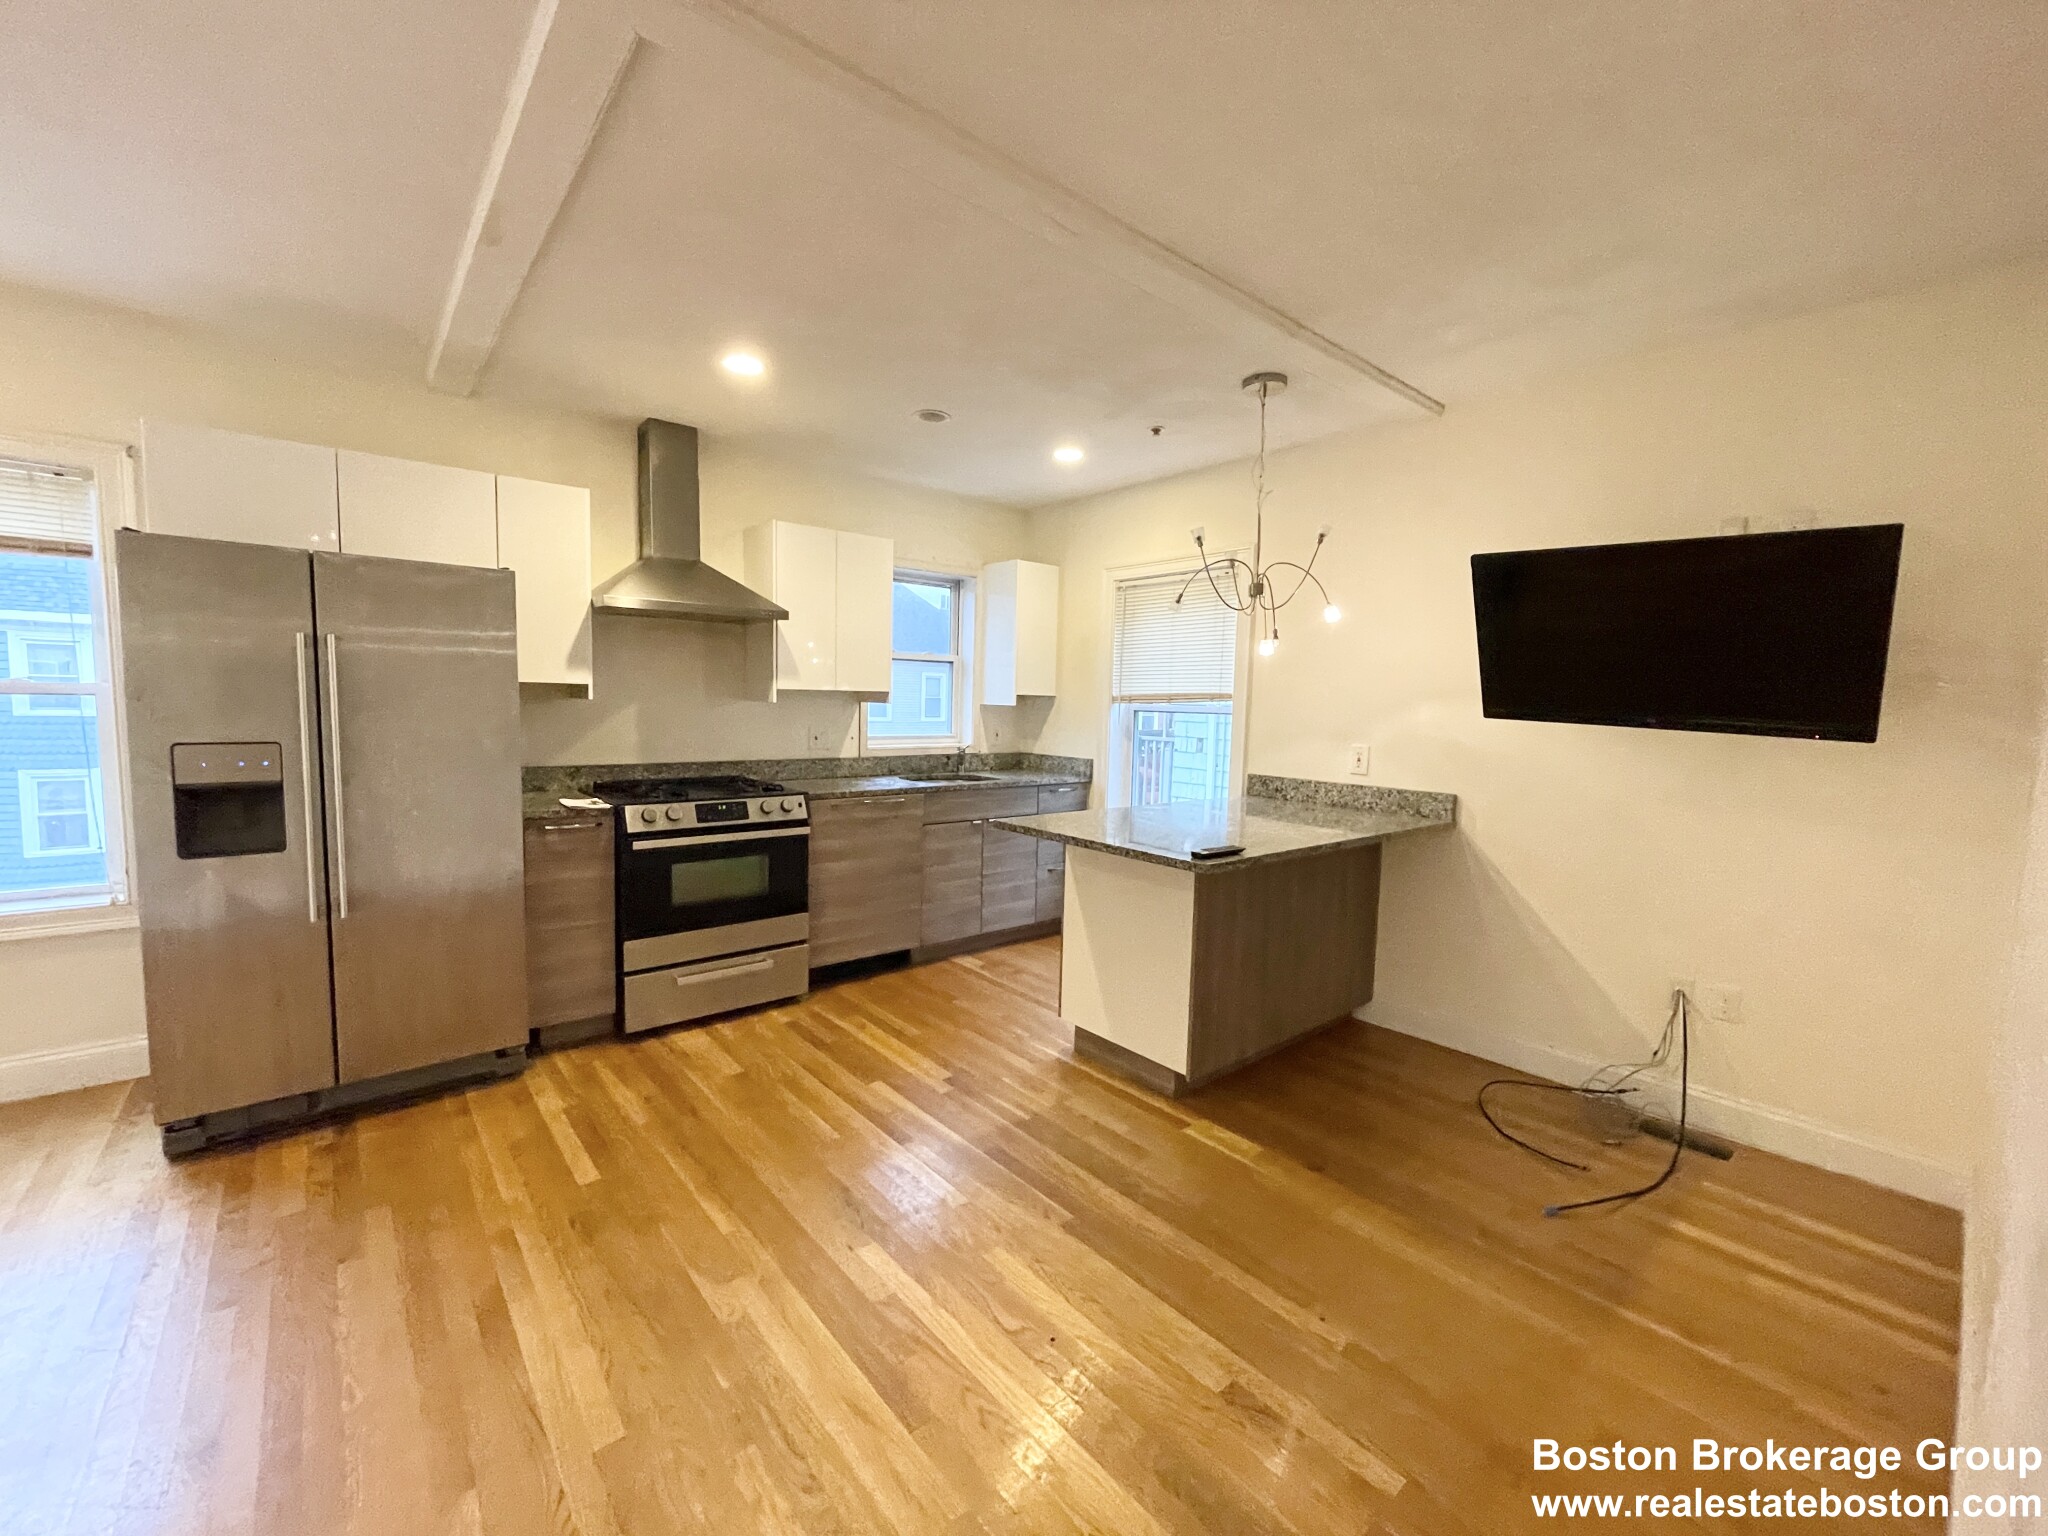 Photos of apartment on Sunset St.,Boston MA 02120